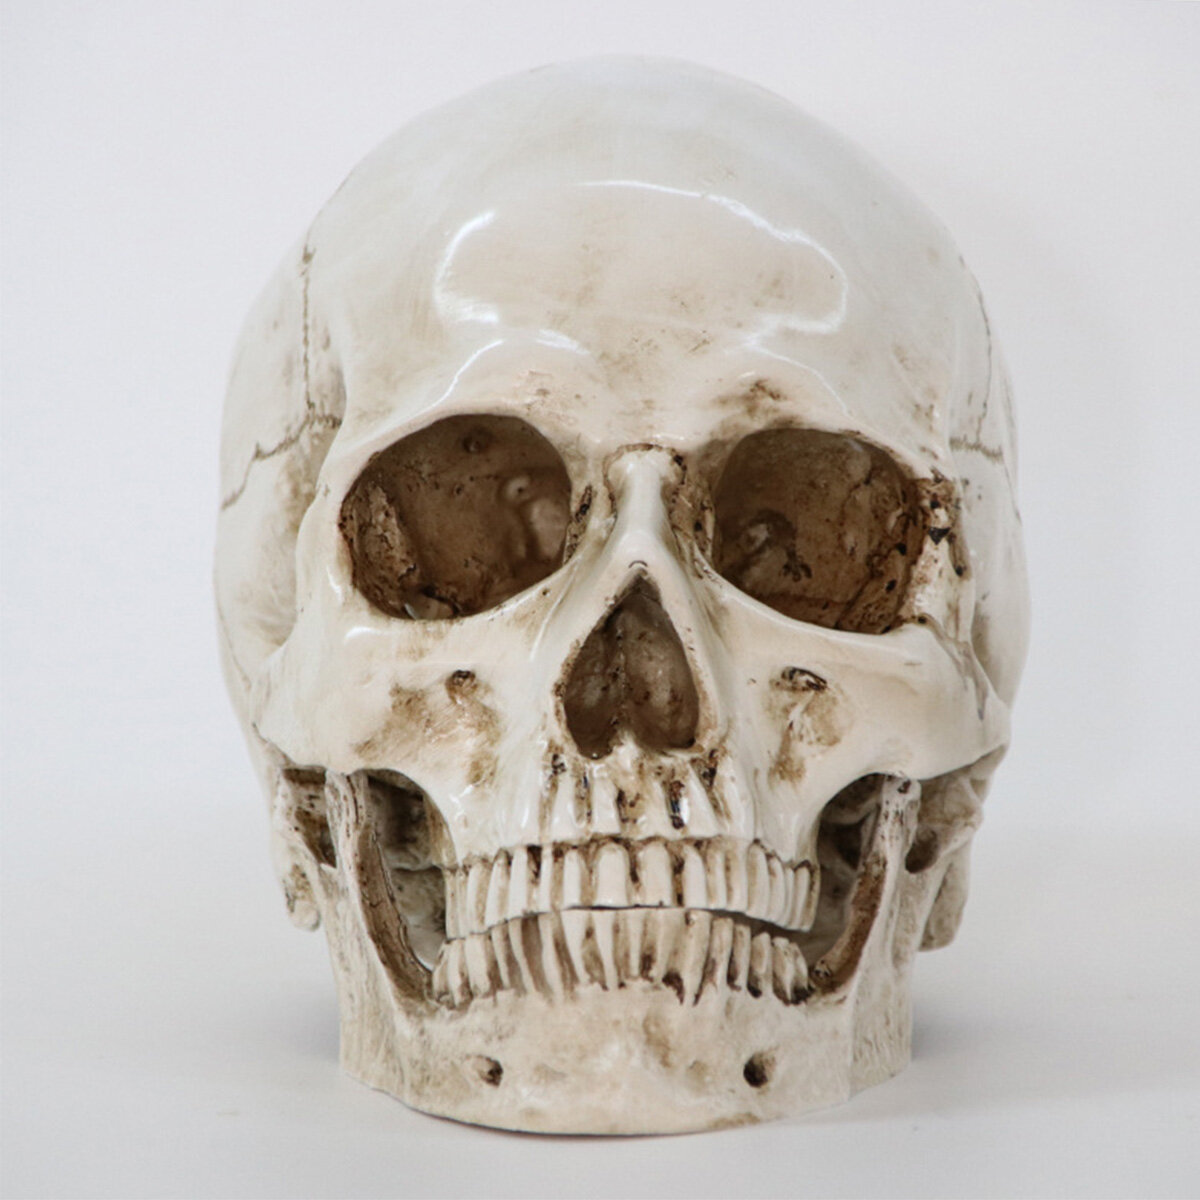 

Halloween Skeleton Head Decor Skeleton Model Horror Scary Gothic Skull Prop Ornaments Halloween Atmosphere Decoration